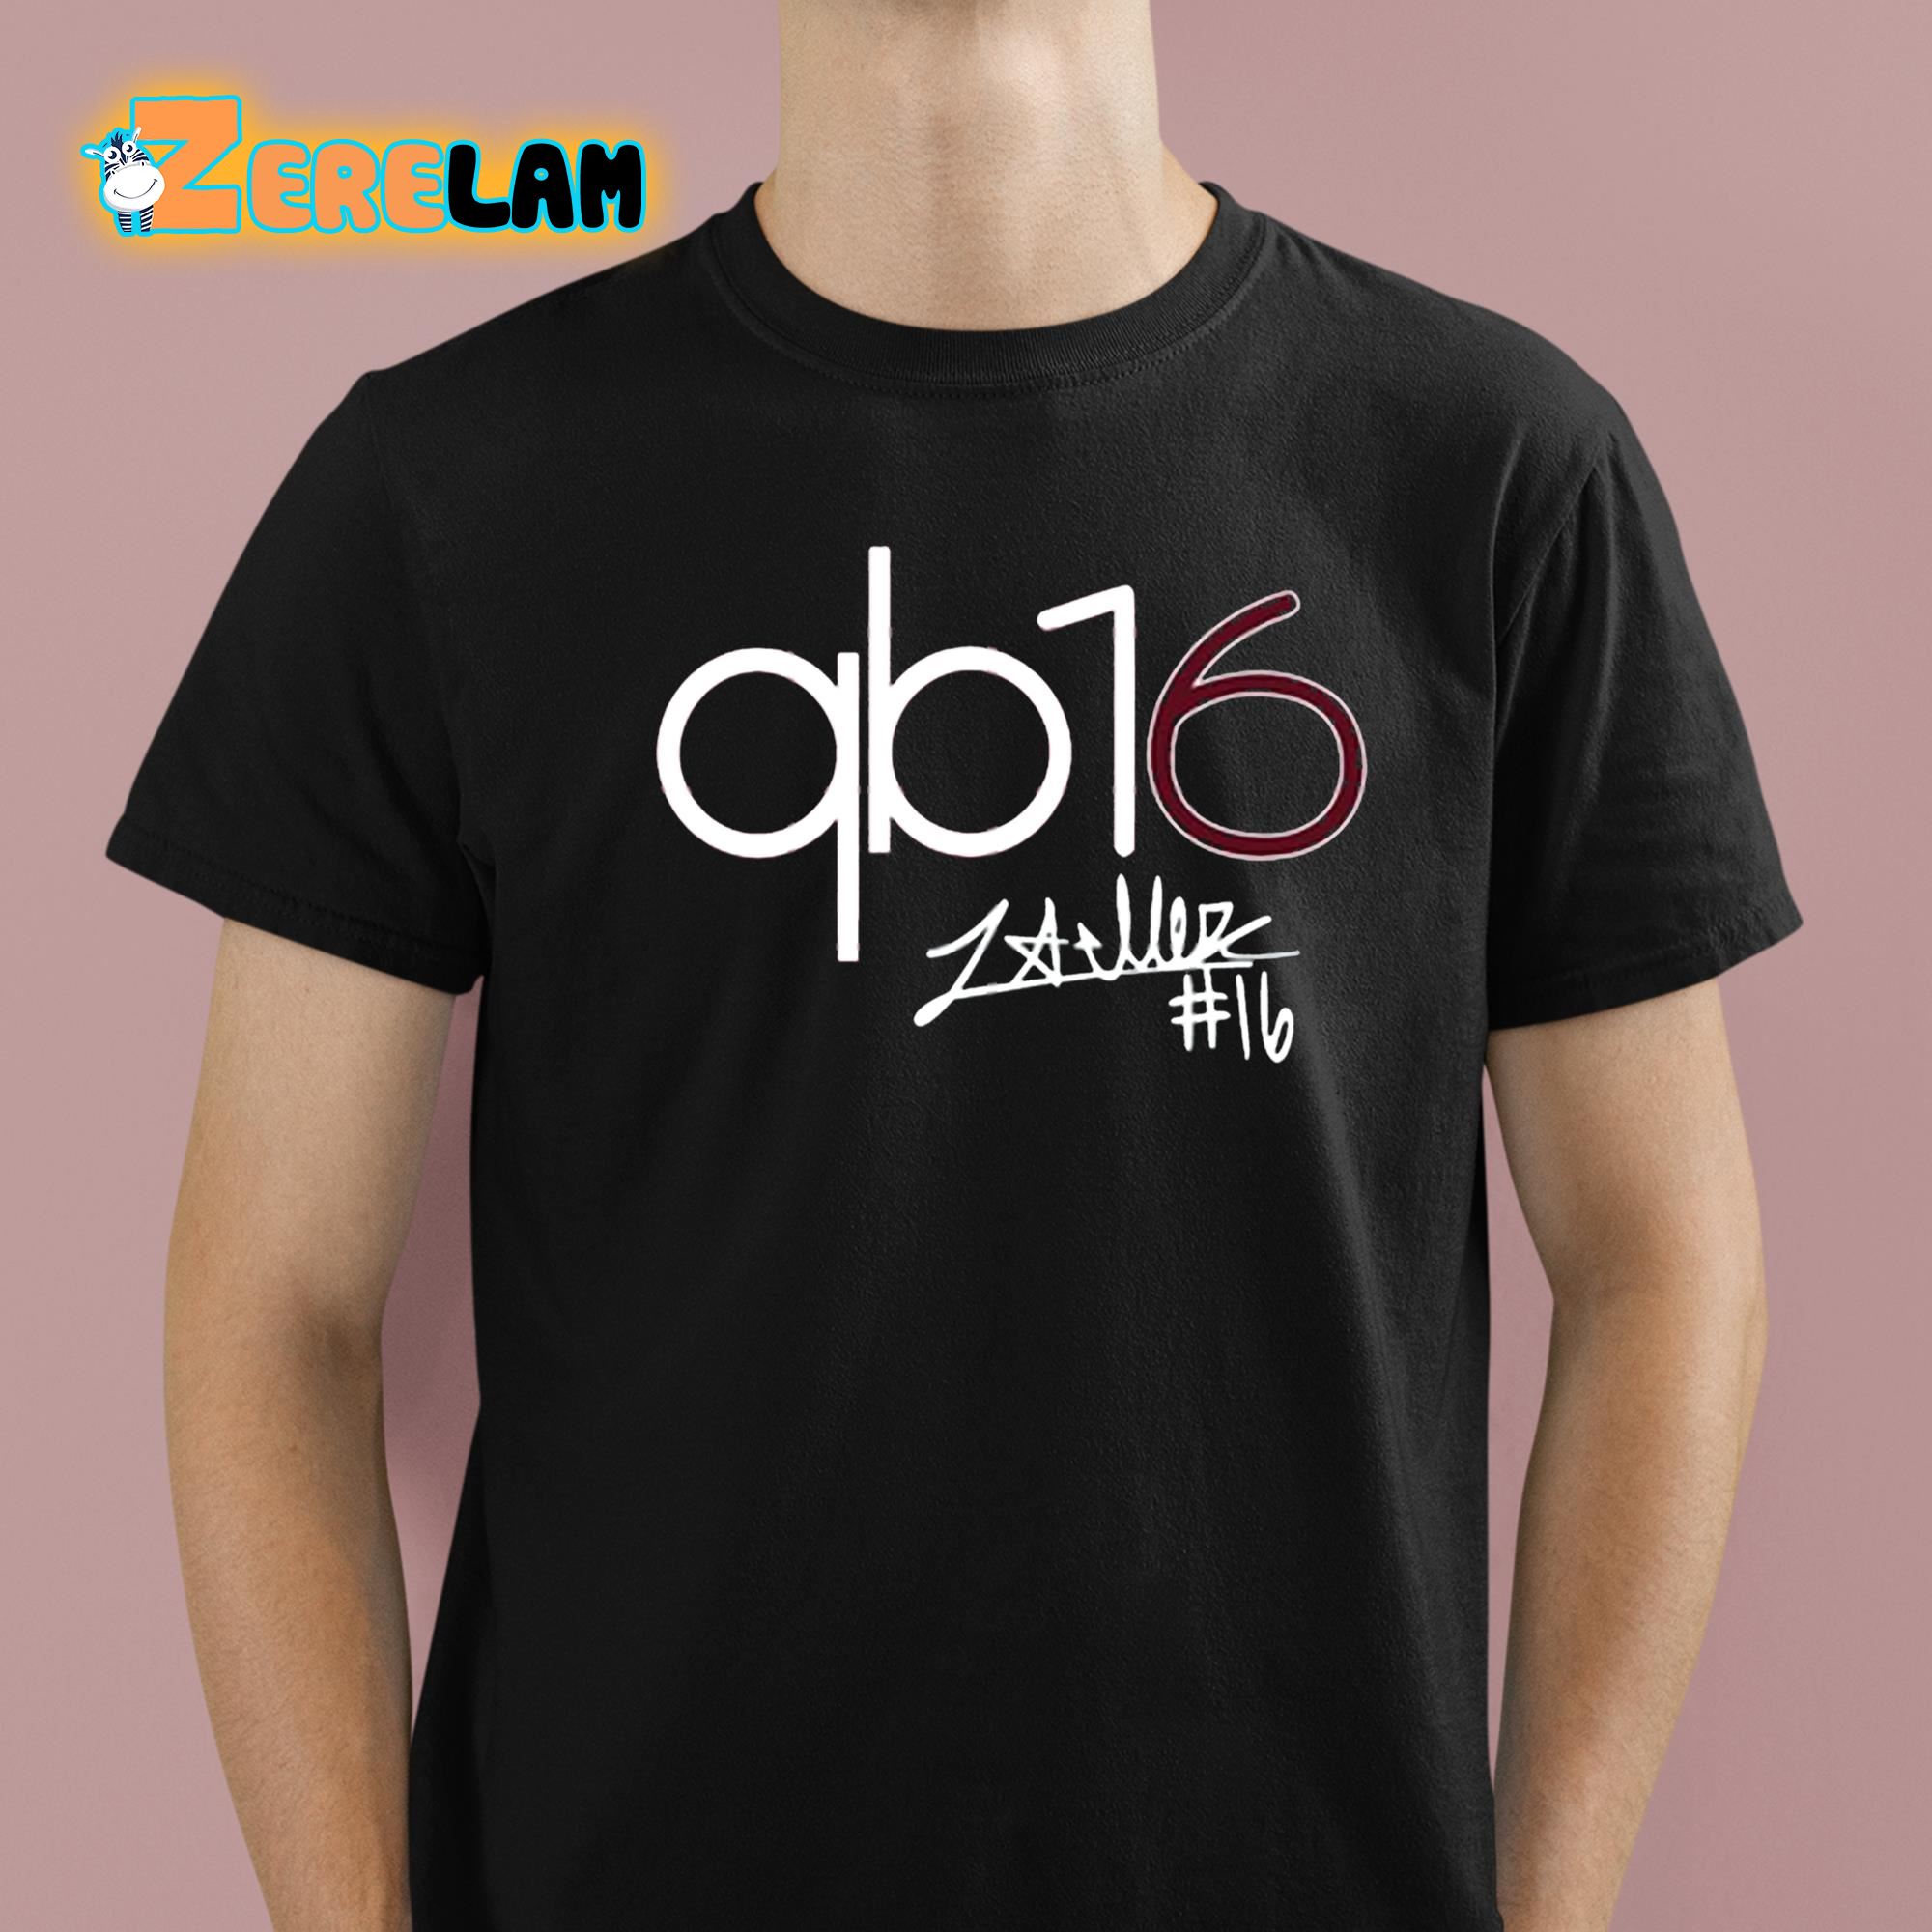 Qb16 Signature Series Shirt 1 1